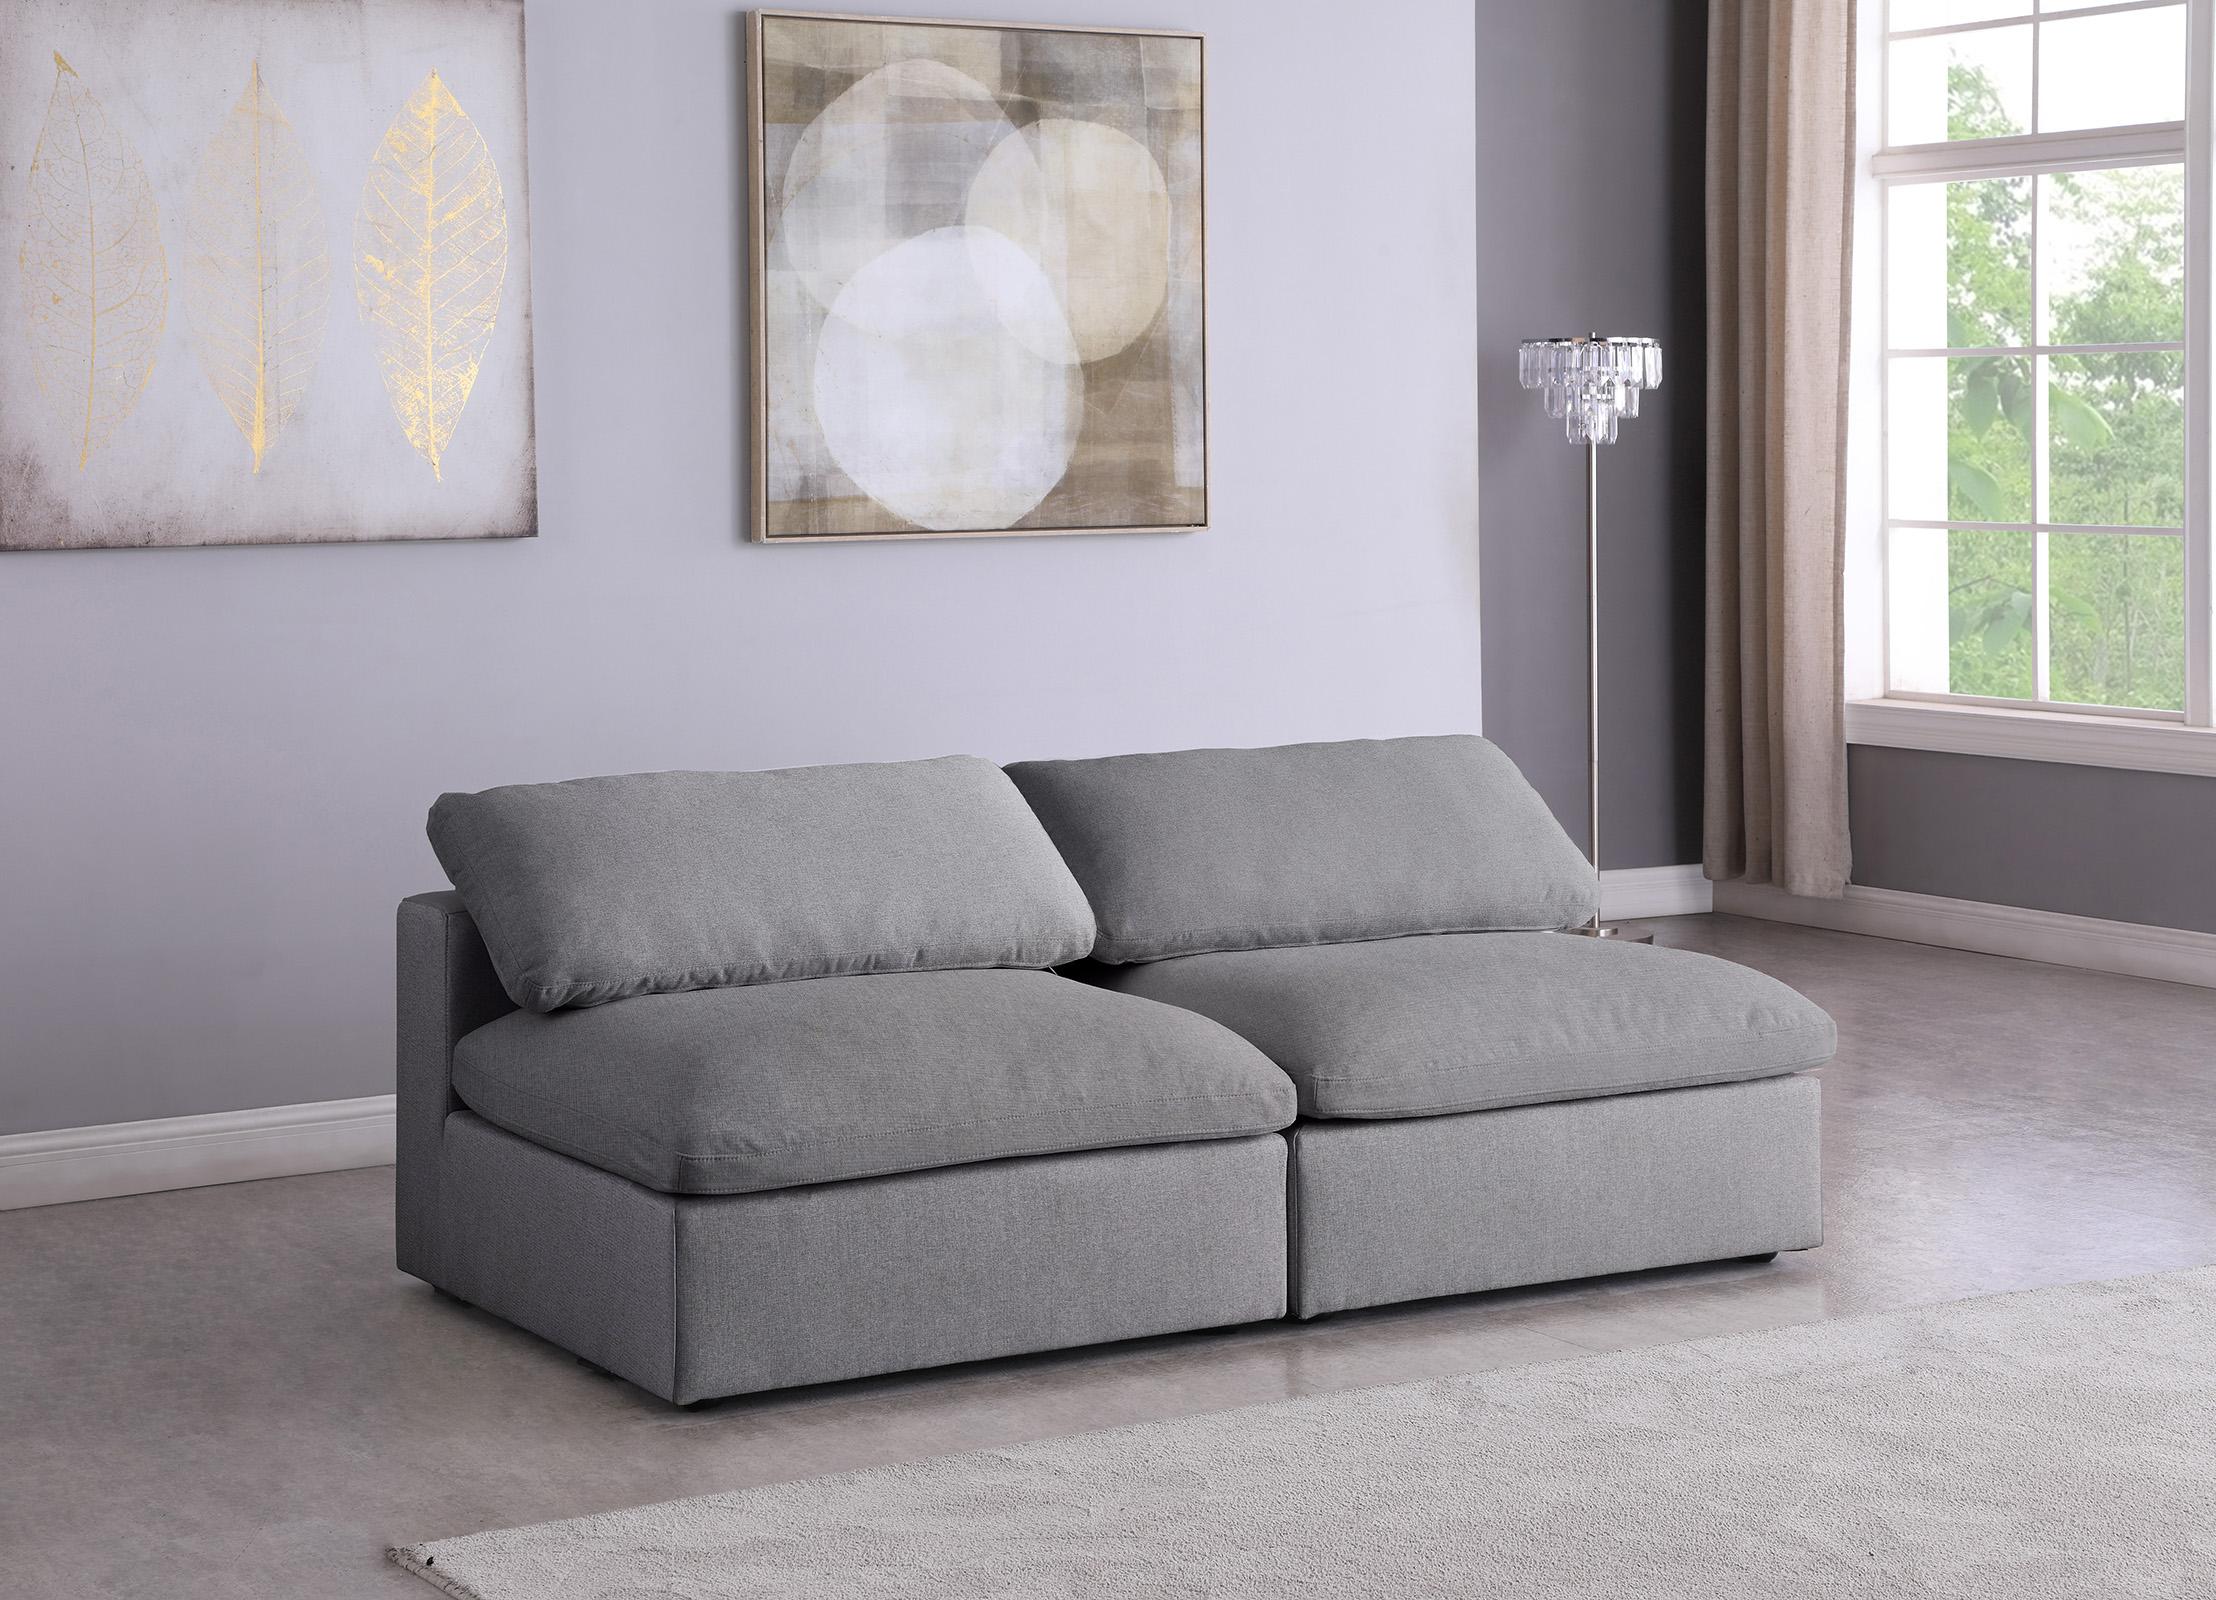 

    
Serene Grey Linen Textured Fabric Deluxe Comfort Modular Armless Sofa S78 Meridian
